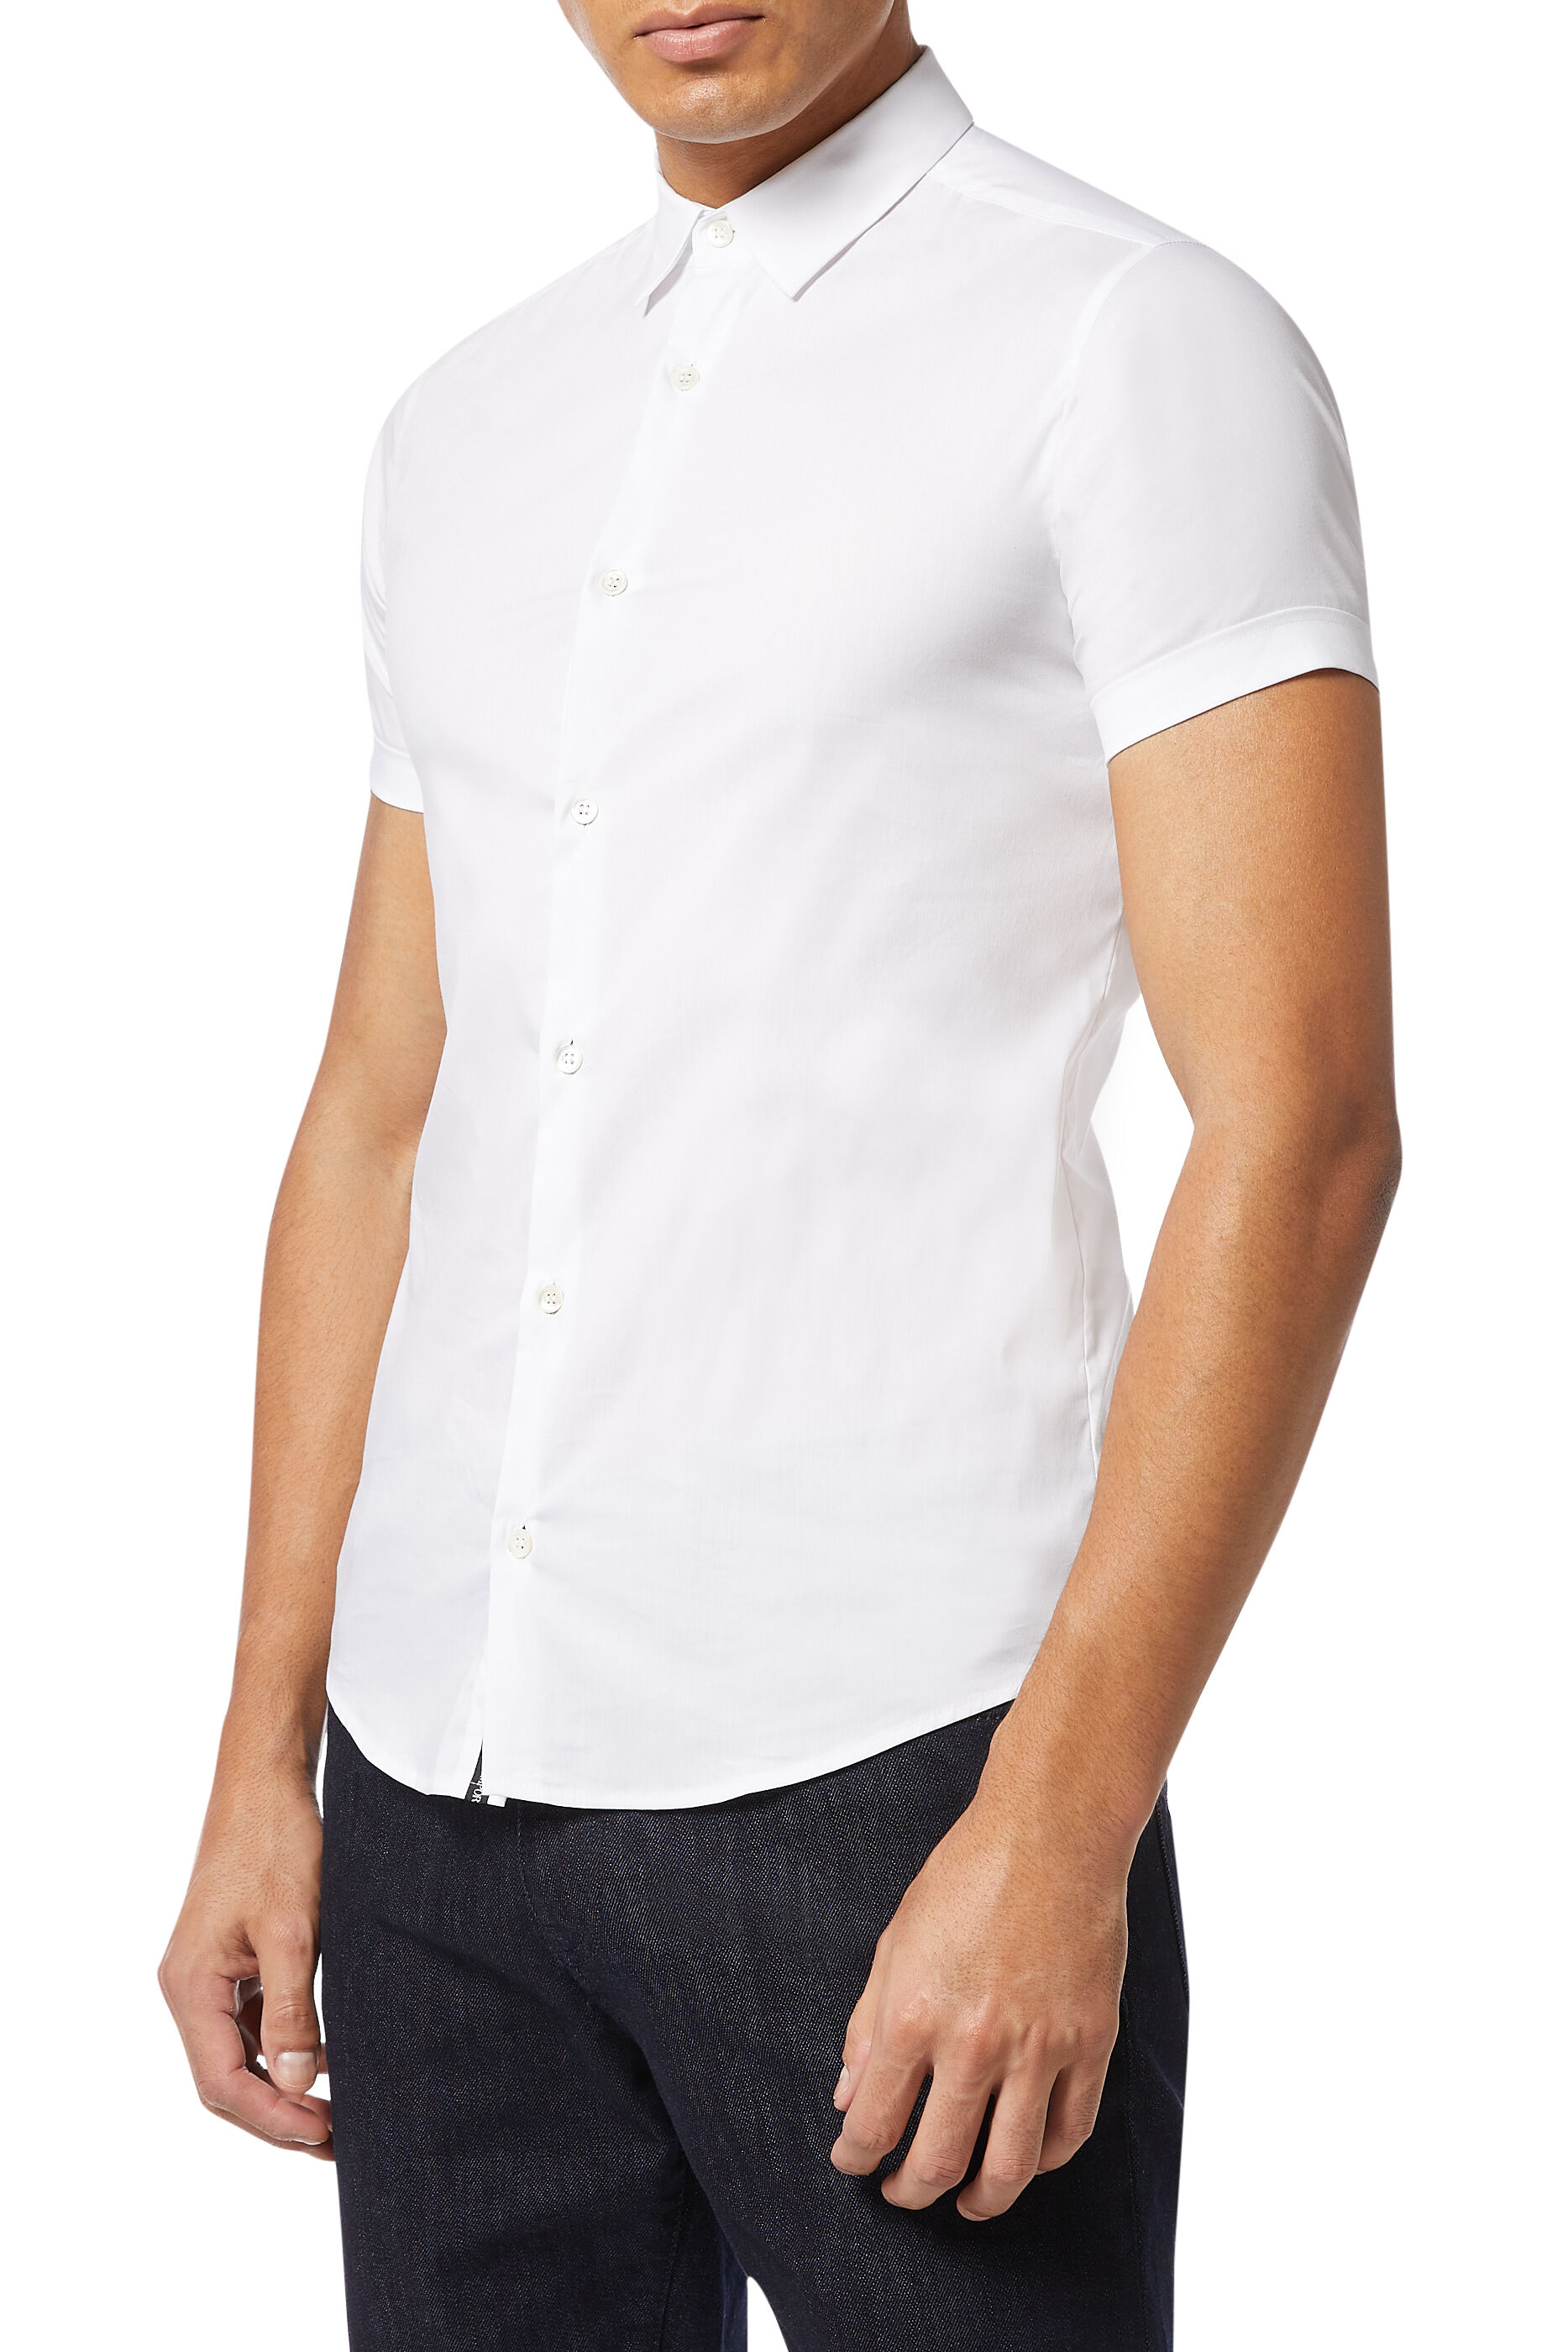 armani short sleeve shirt sale